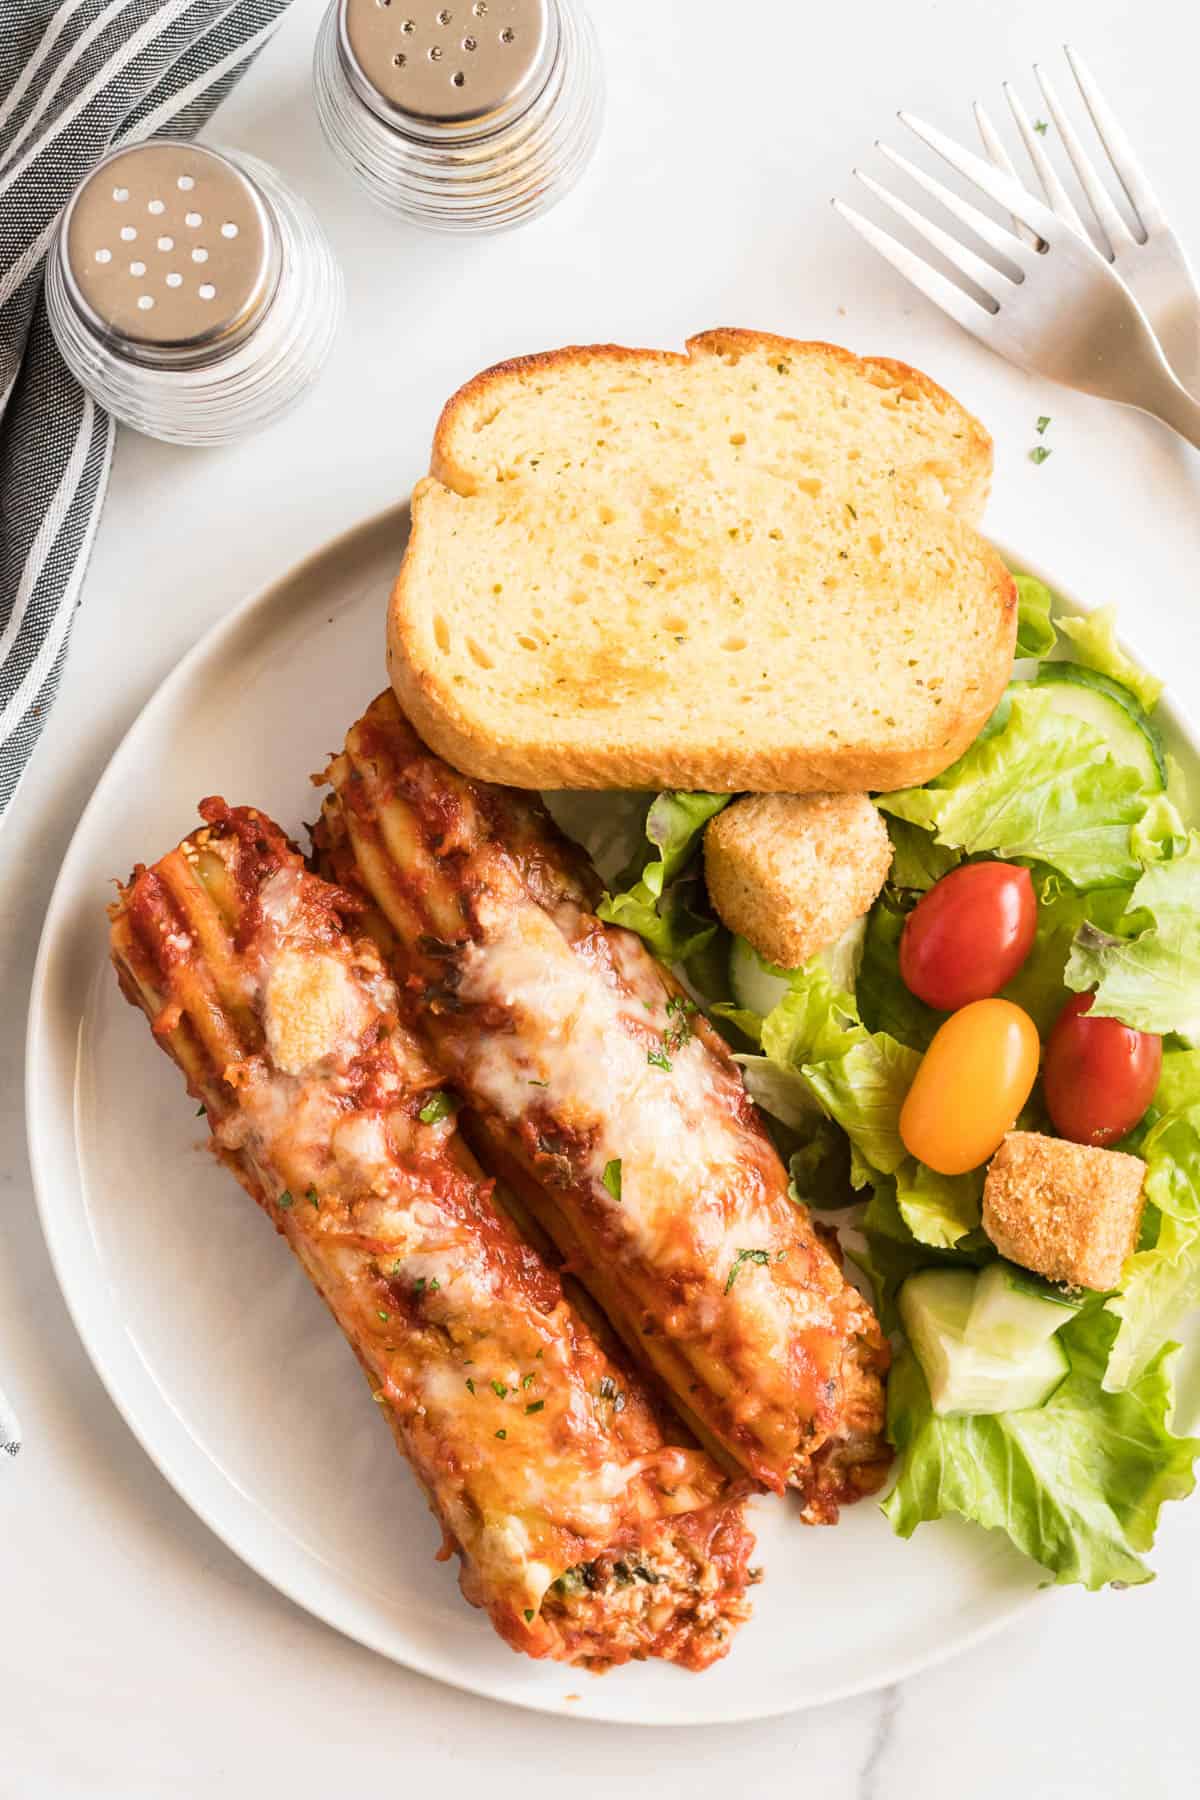 Manicotti, salad and toast on a white plate.